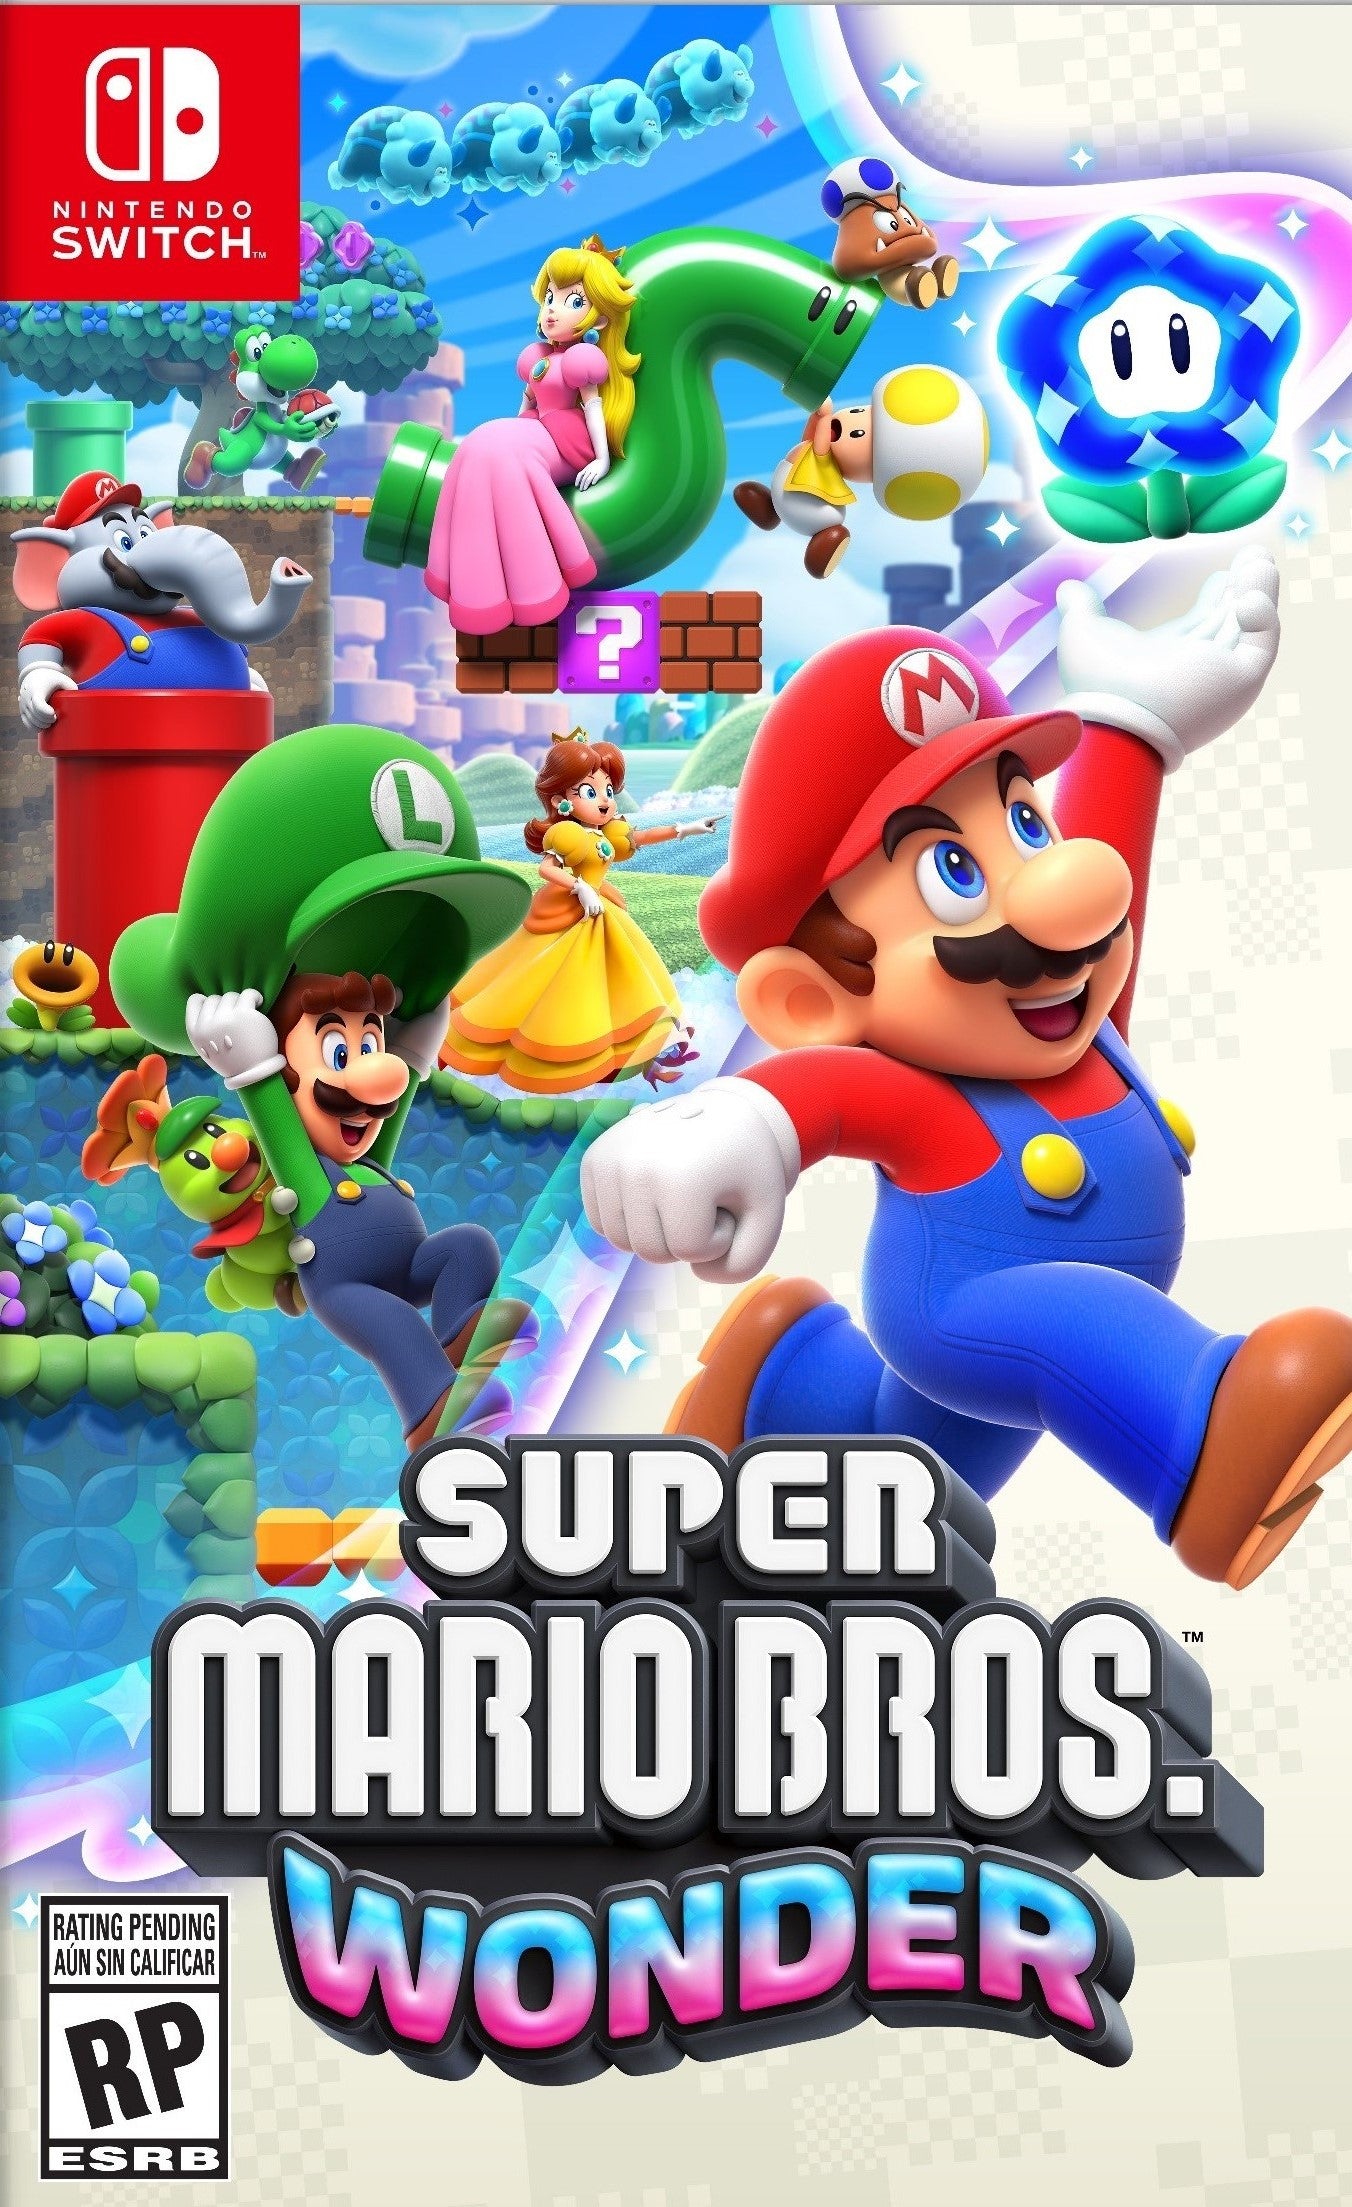 Super Mario Bros. Wonder (Standard Edition) - Nintendo Switch